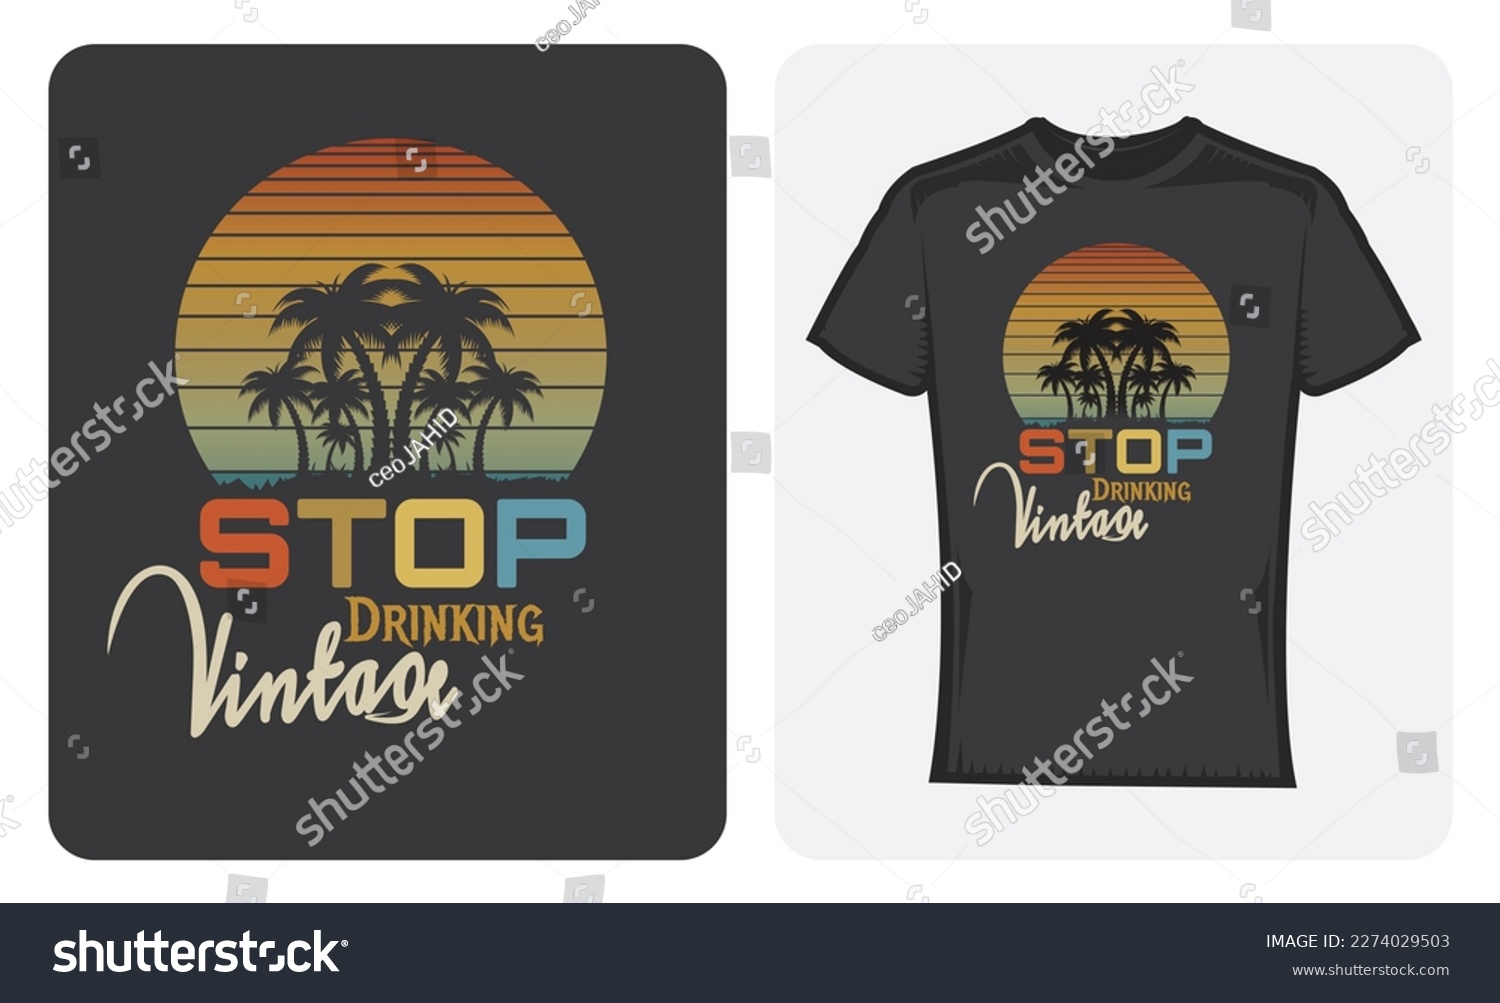 SVG of Stop drinking vintage retro t-shirt design. svg